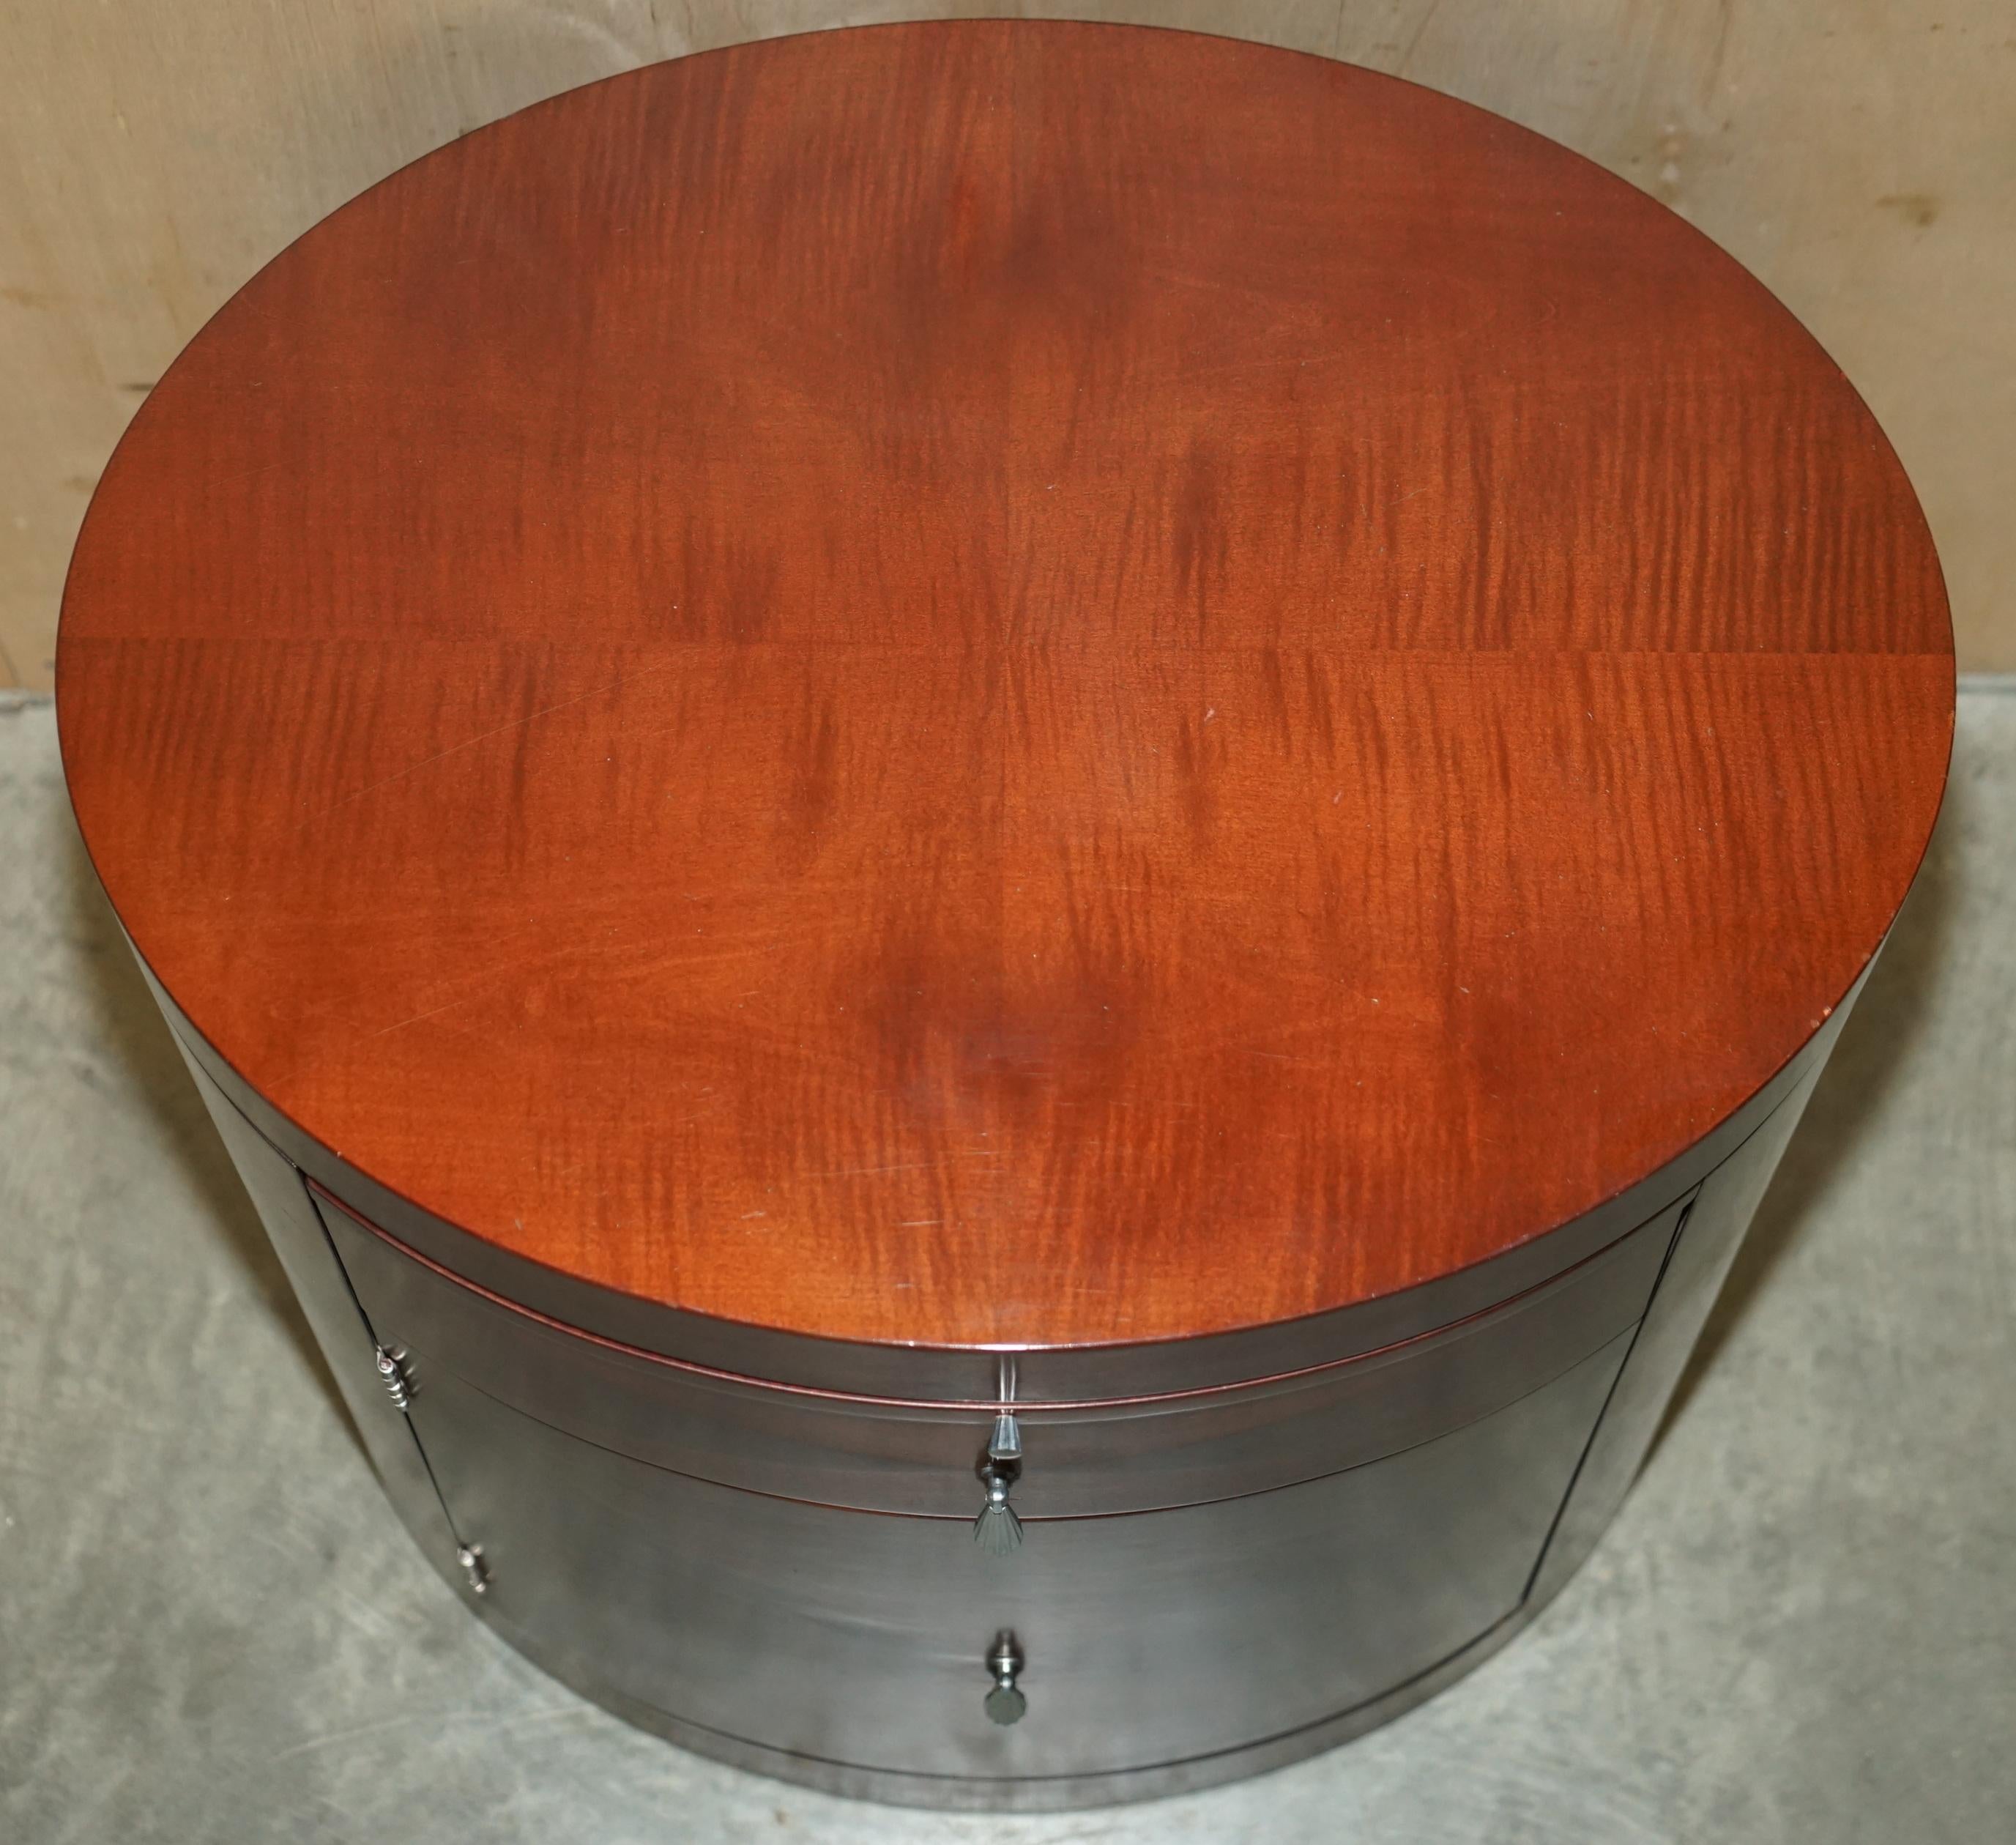 Stunning Pair of Vintage Oval Baker Furniture Hardwood Side End Table Cupbards 1